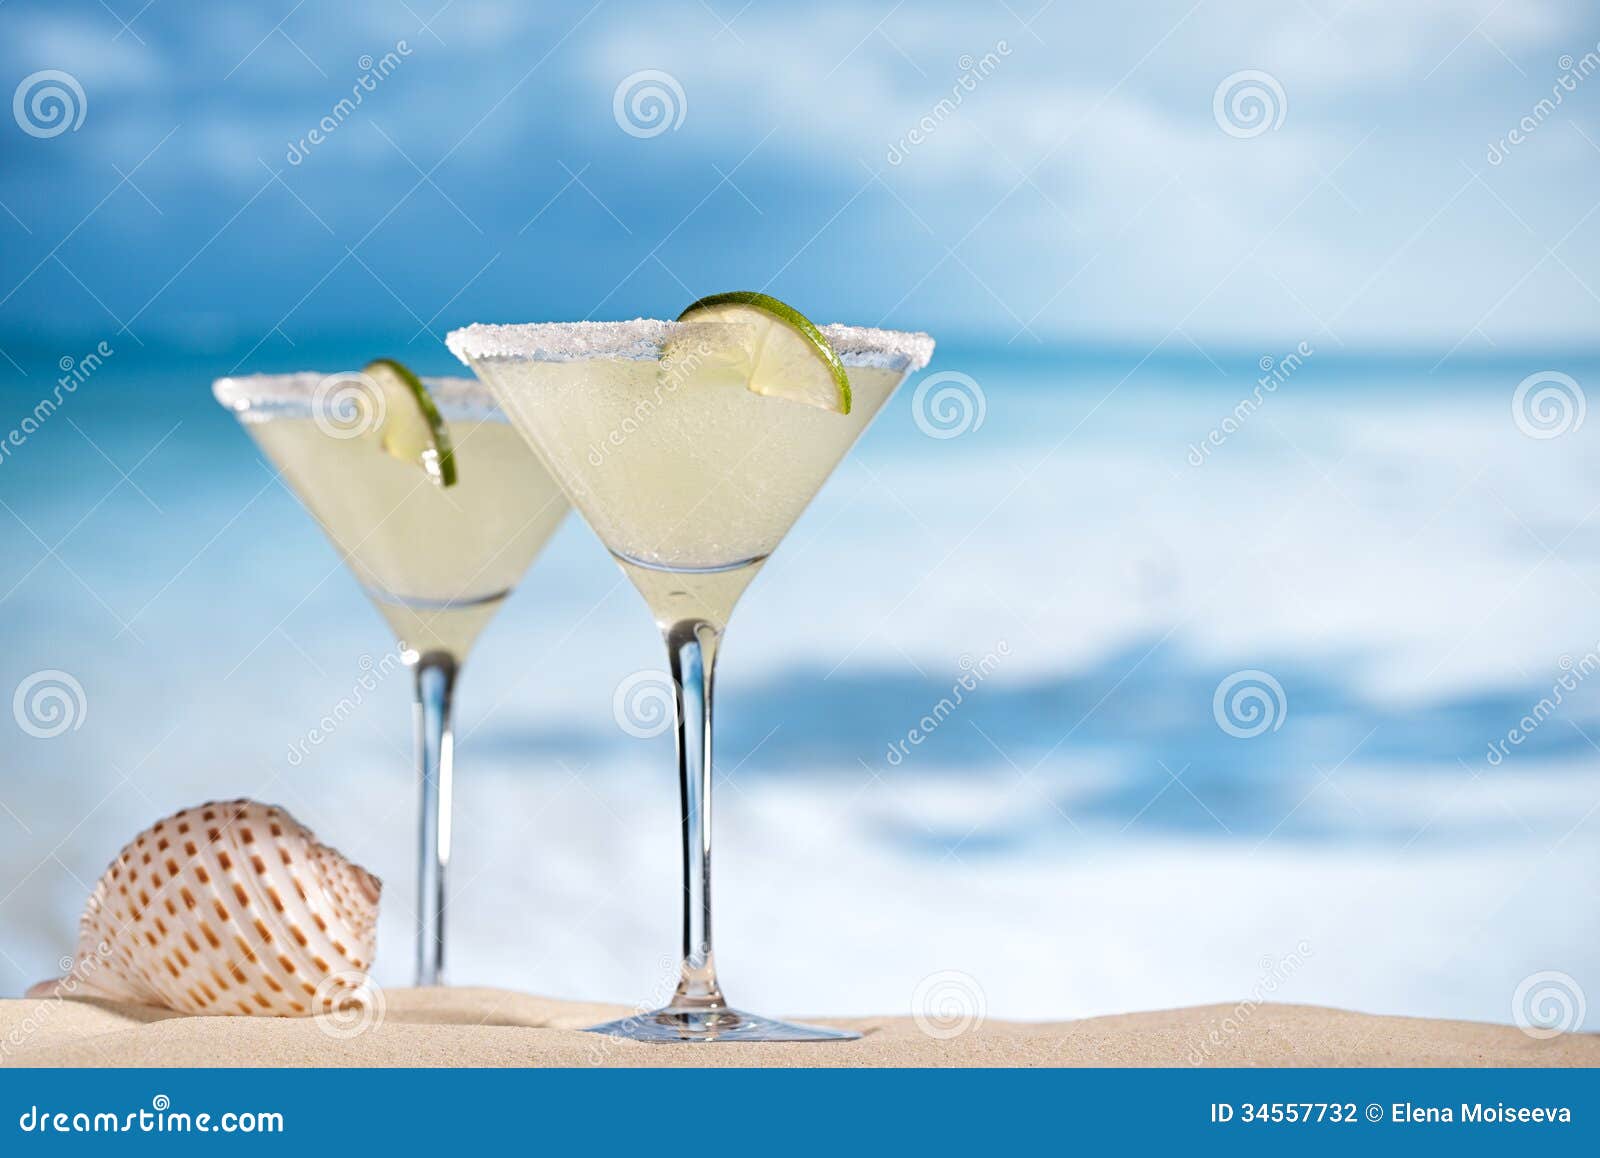 margarita cocktail on beach, blue sea and sky